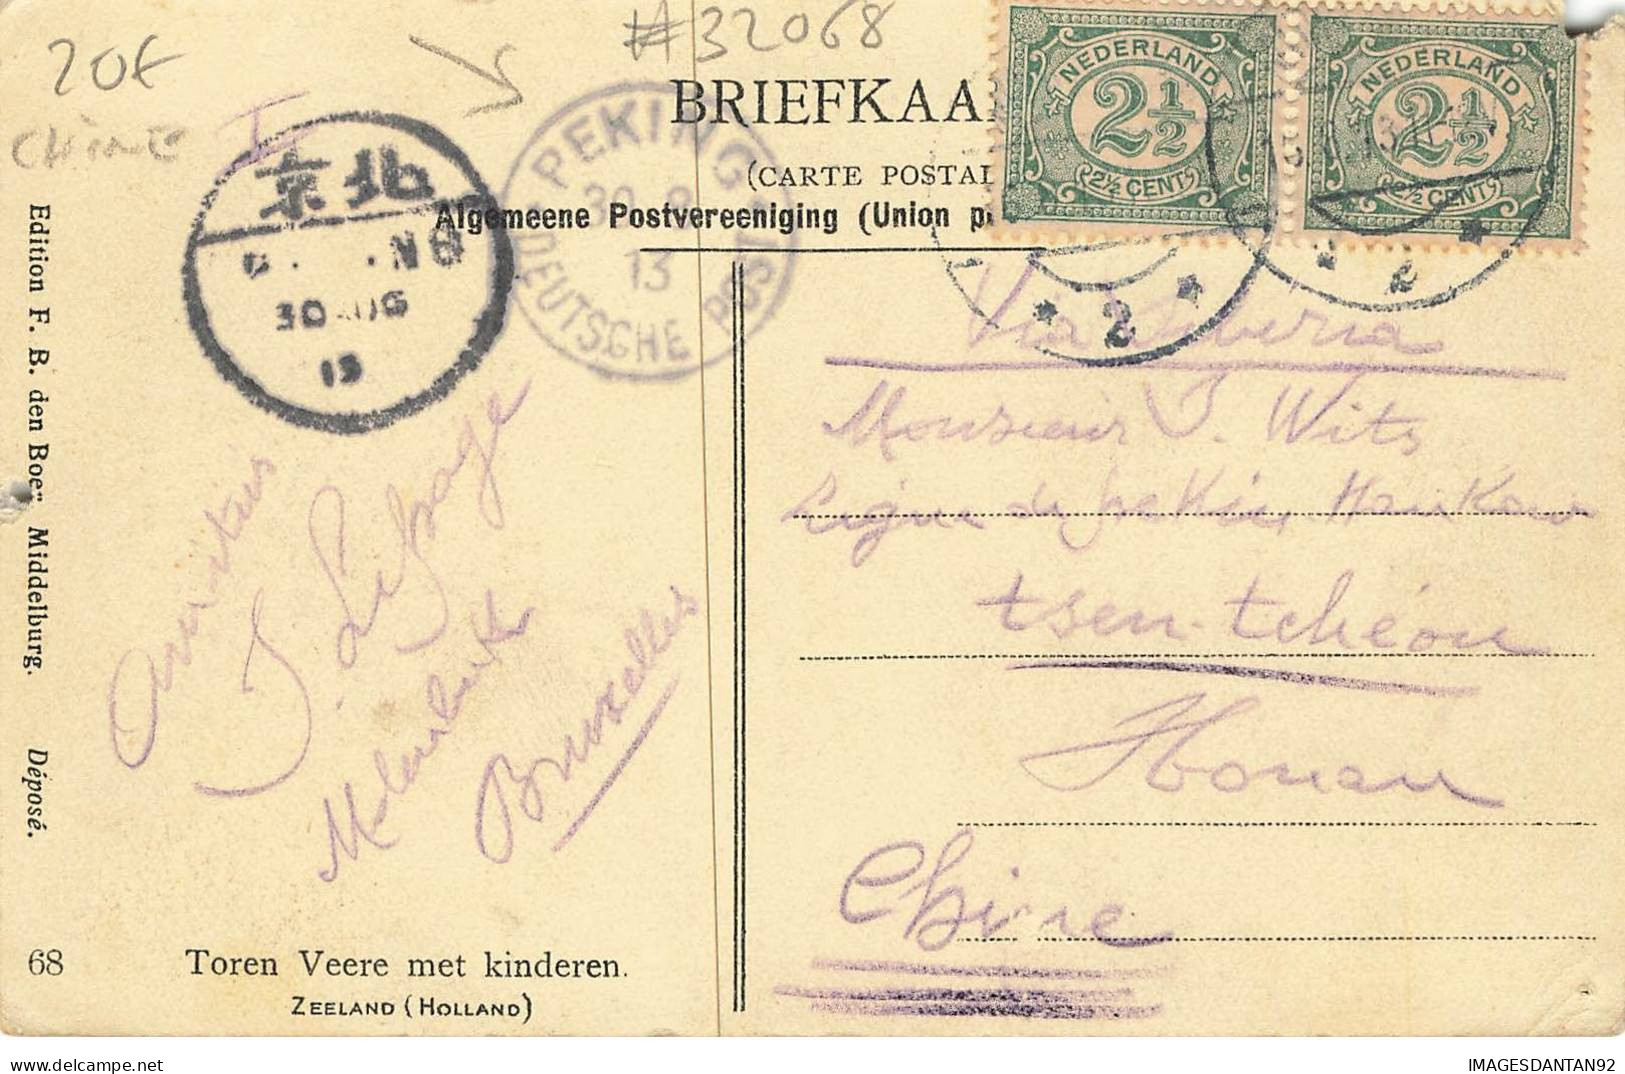 CHINE TSEN TCHEOU HONAN #32068 PEKING DEUTSCH POST CACHET CIRCULE FROM NEDERLAND PAYS BAS - Lettres & Documents